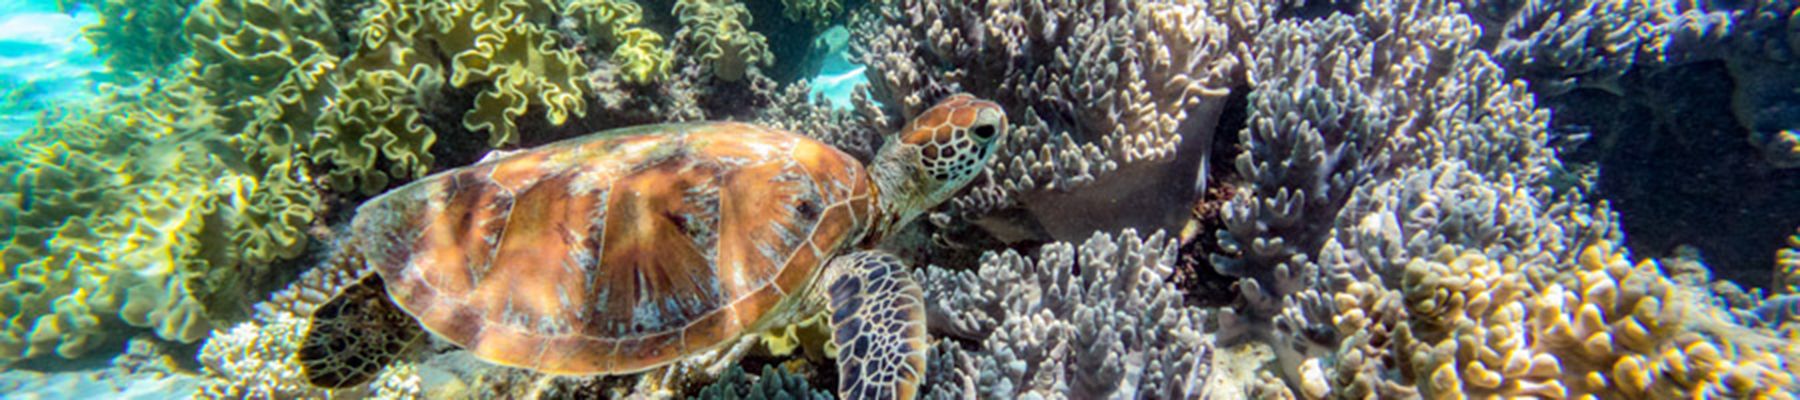 Green sea turtle amongst coral reefs